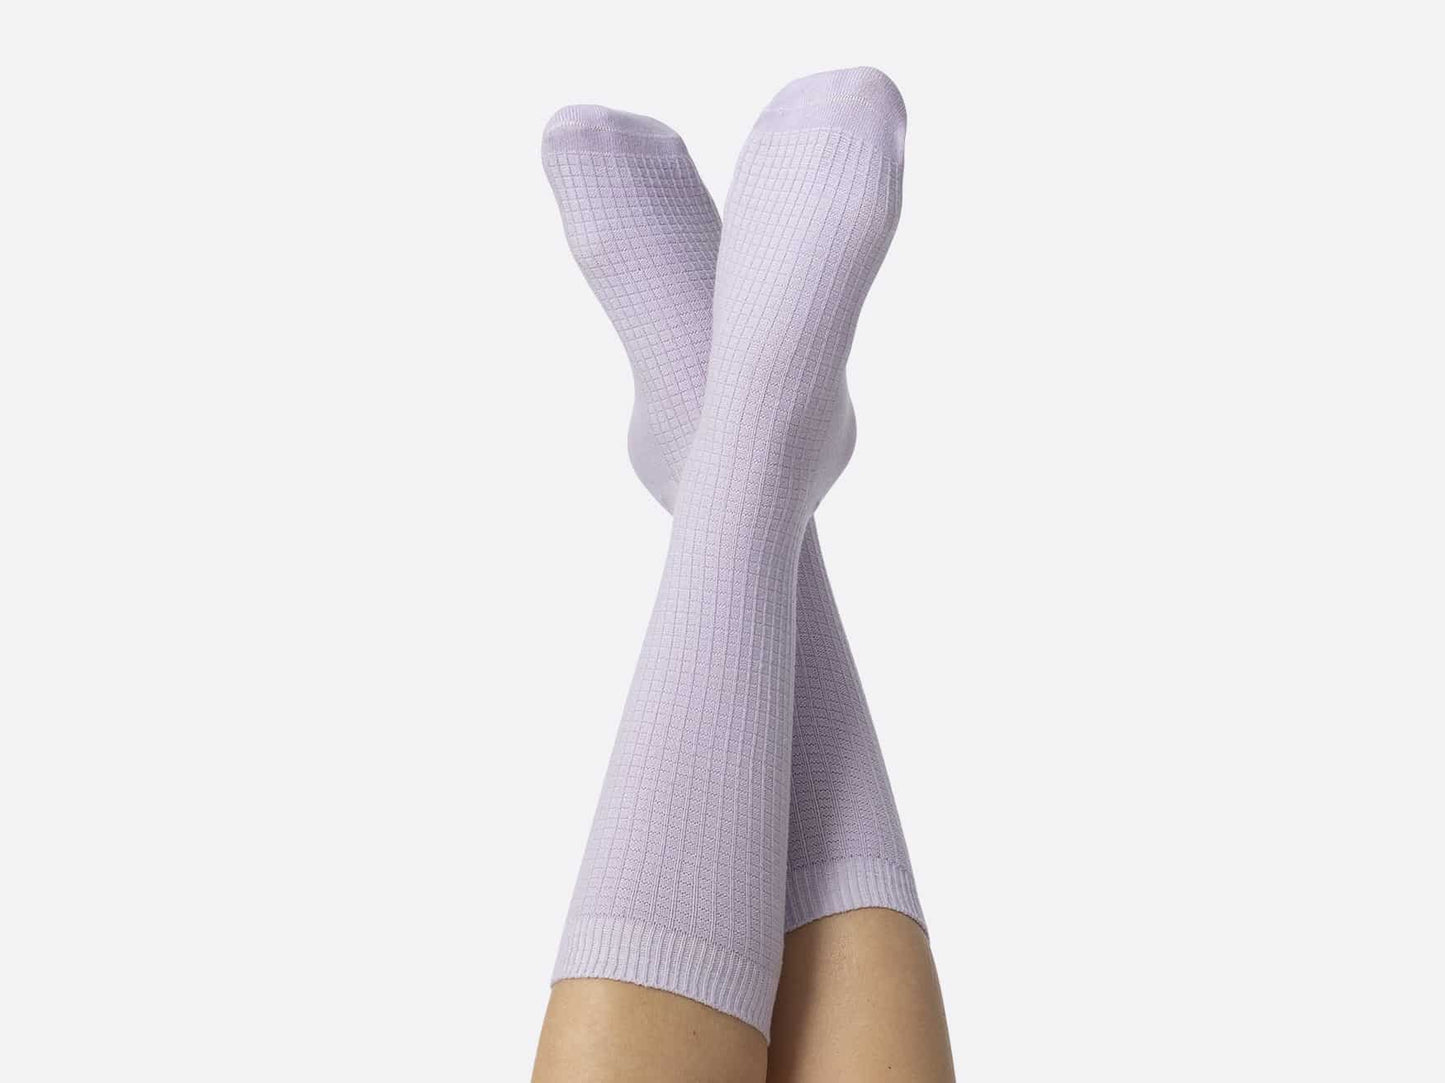 DOIY Yoga Mat Socks Purple